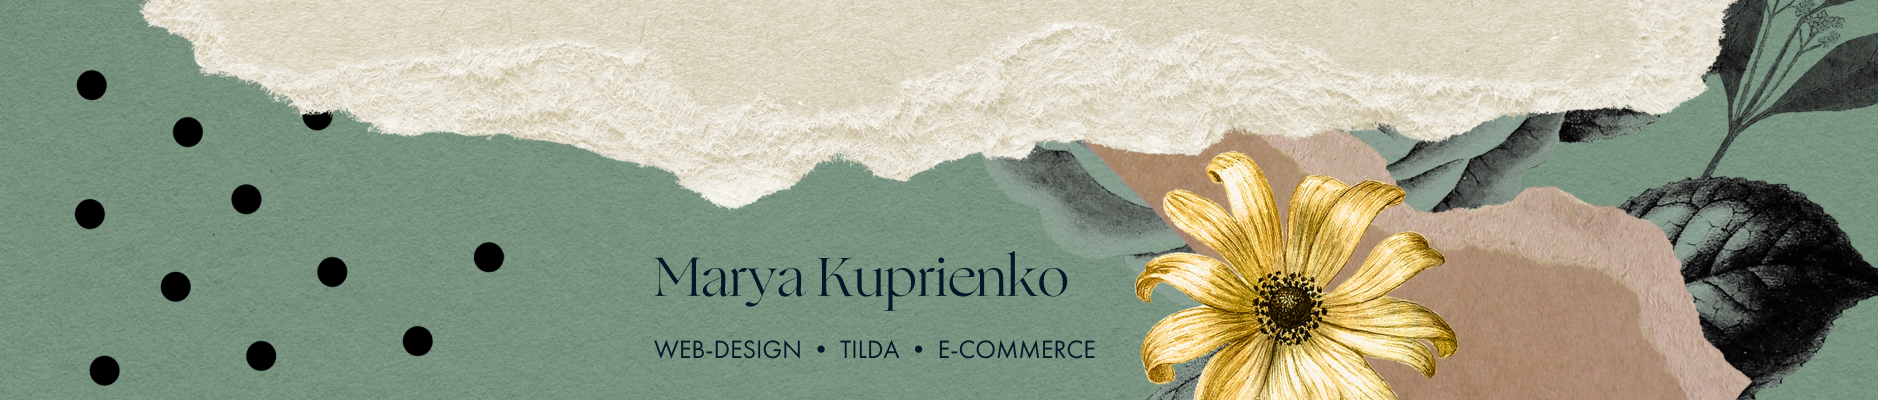 Maria Kuprienko profil başlığı